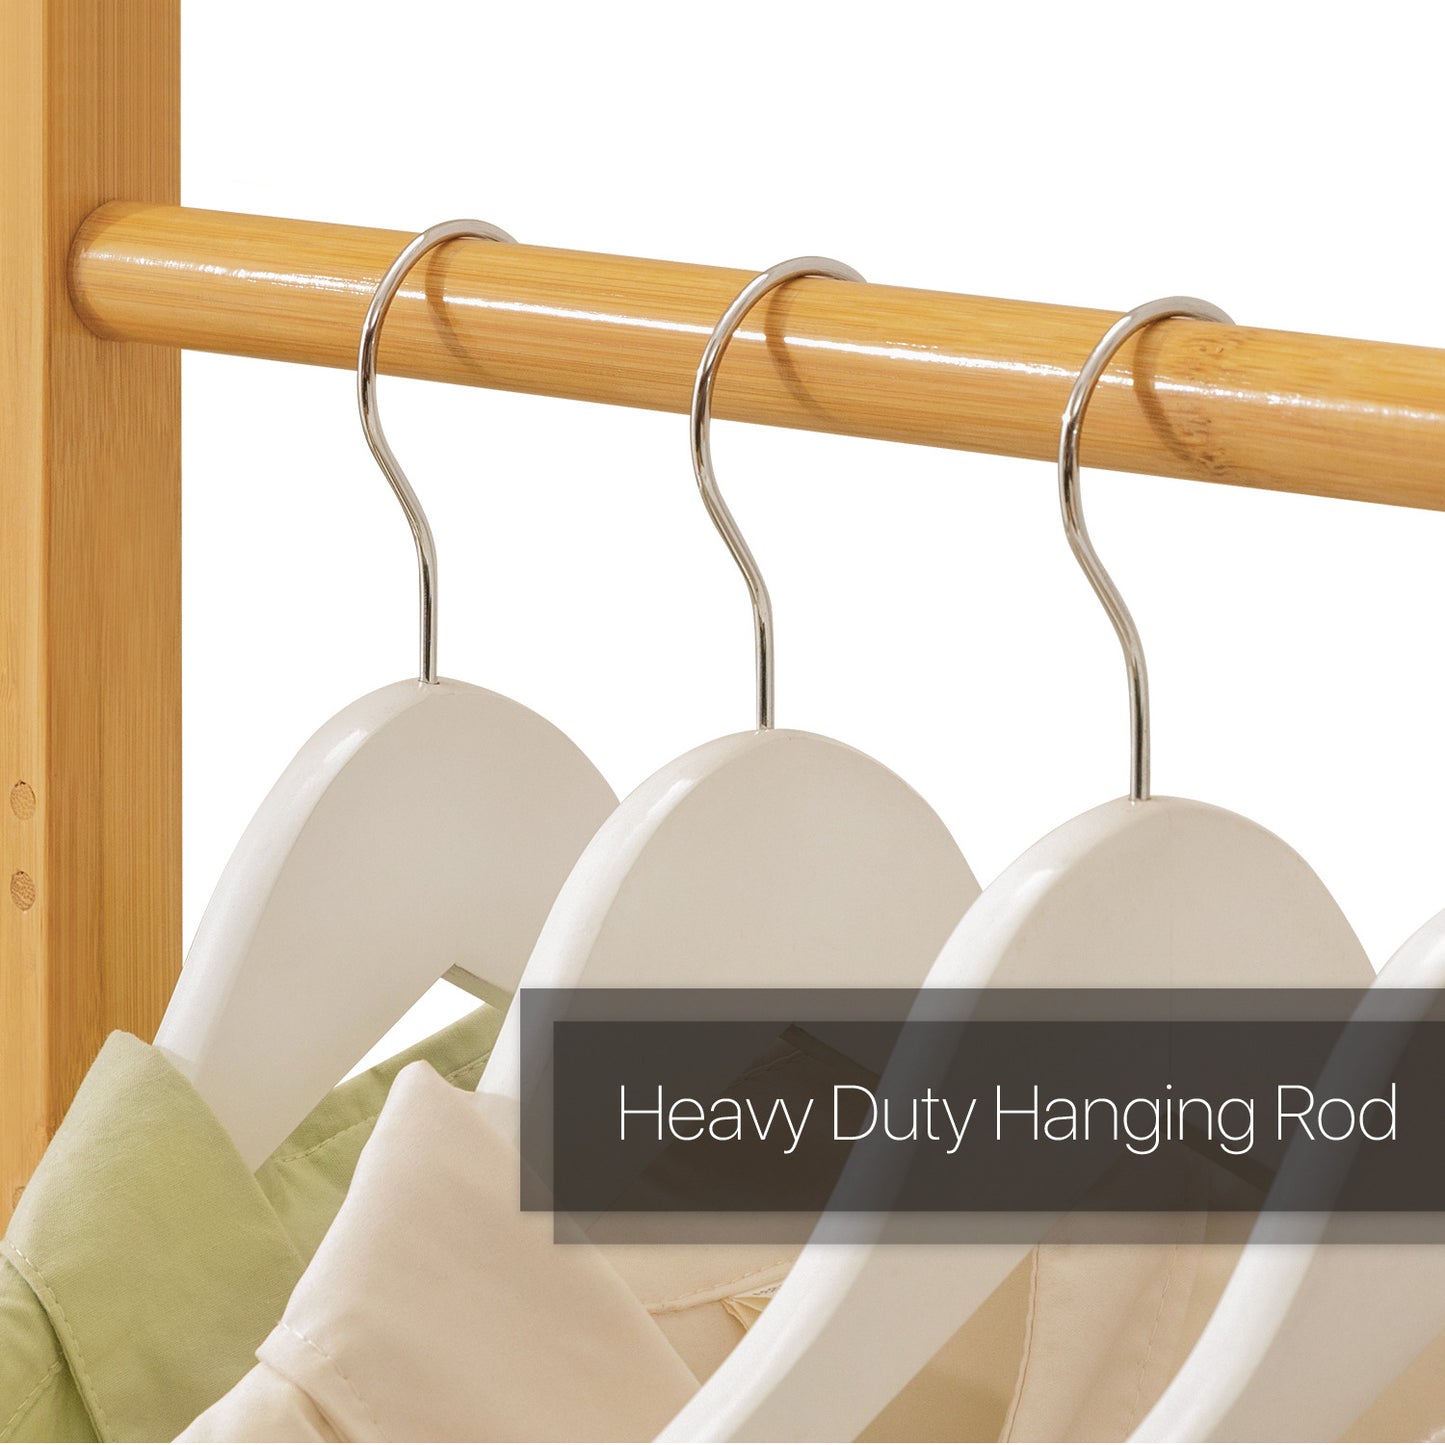 Garment Hanging Stand Rack - 3 Tier Shelves